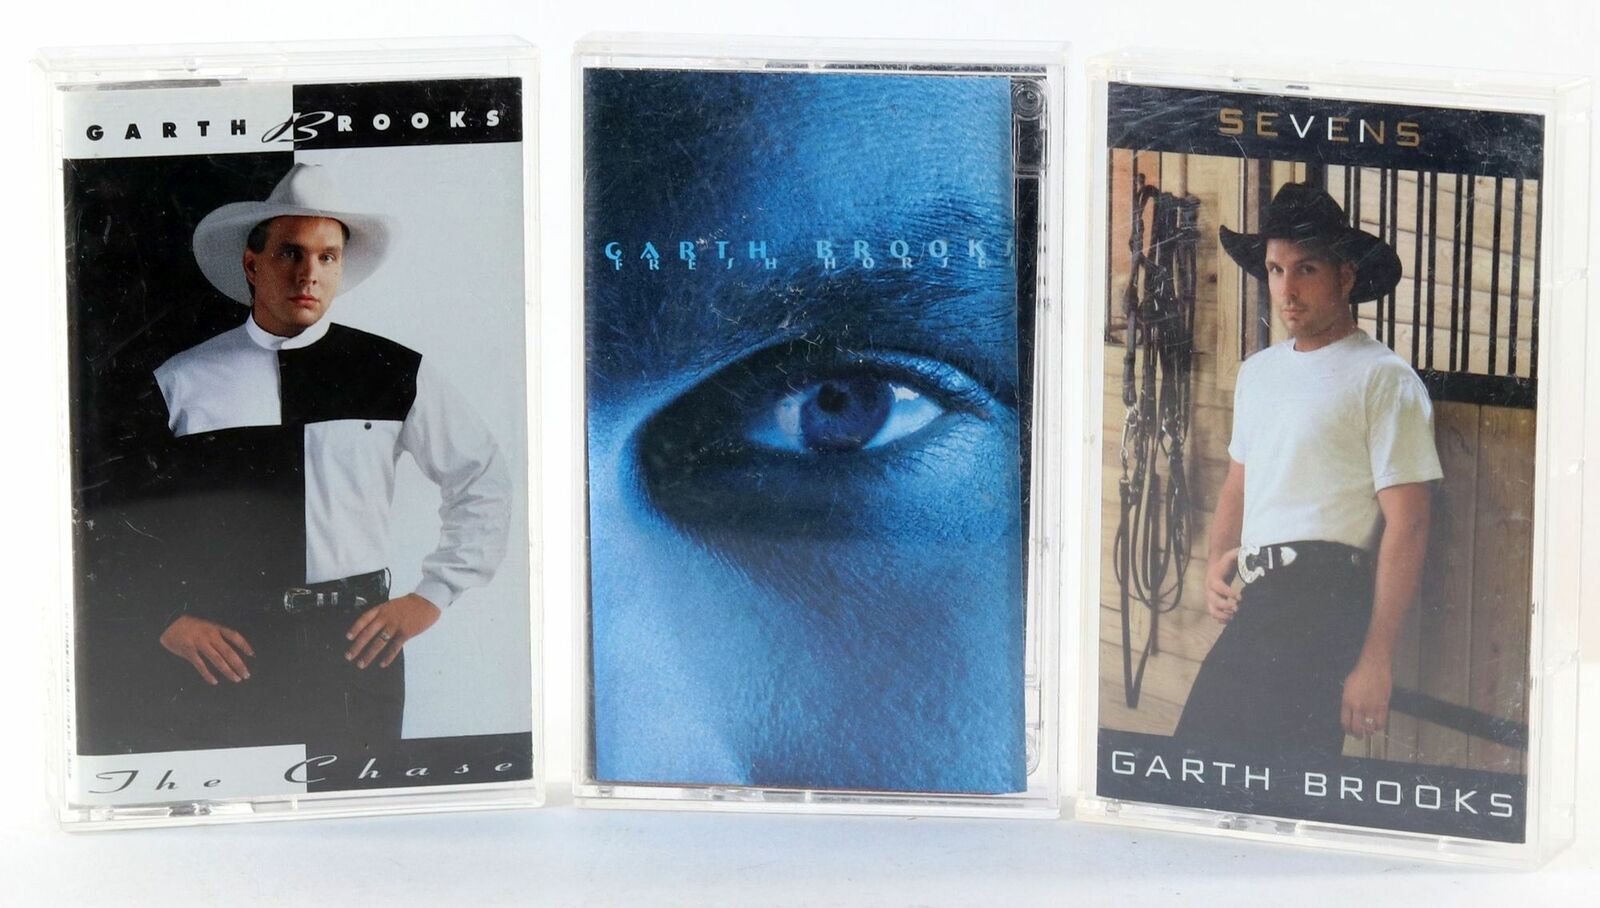 Garth Books Cassette Tapes Lot Of 3 Vintage Music The Chase, Fresh Horse, Sevens